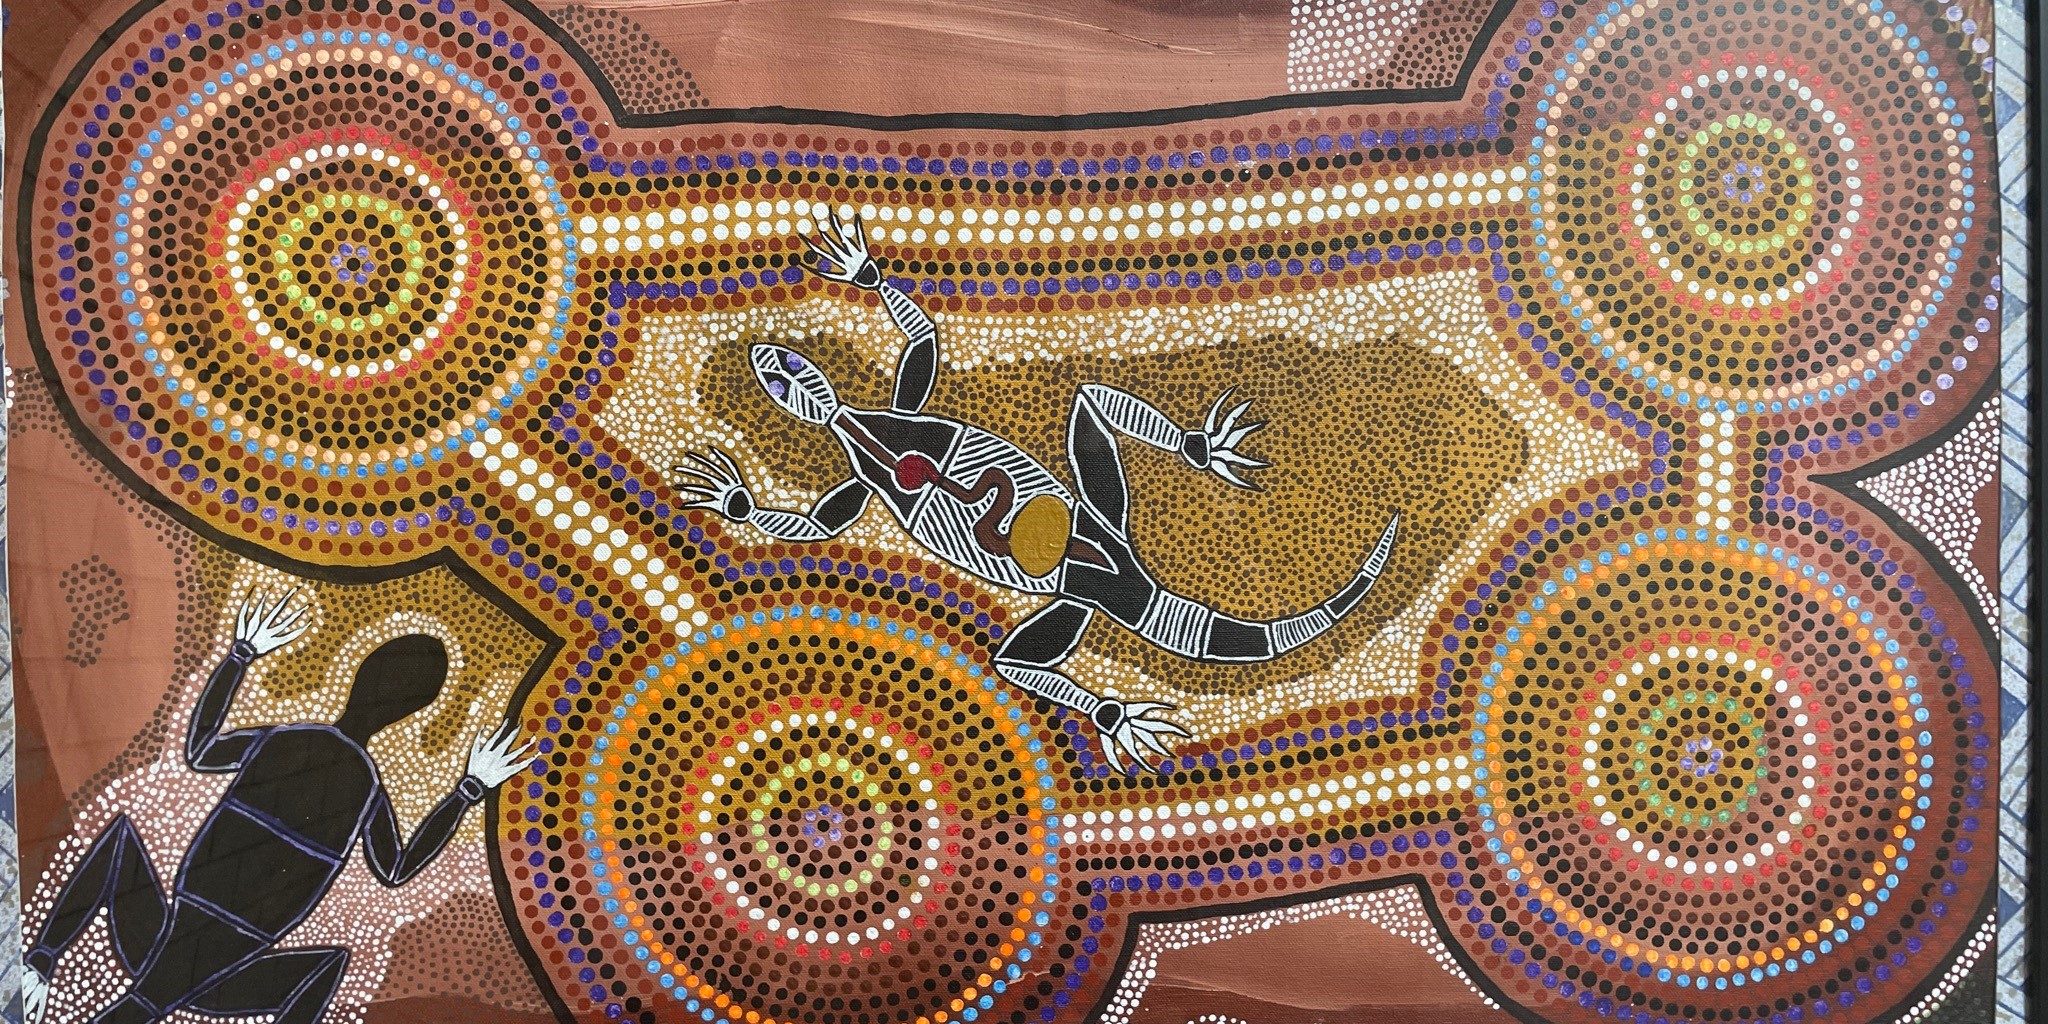 An artwork by indigenous artist Bradley Duka from Shepparton